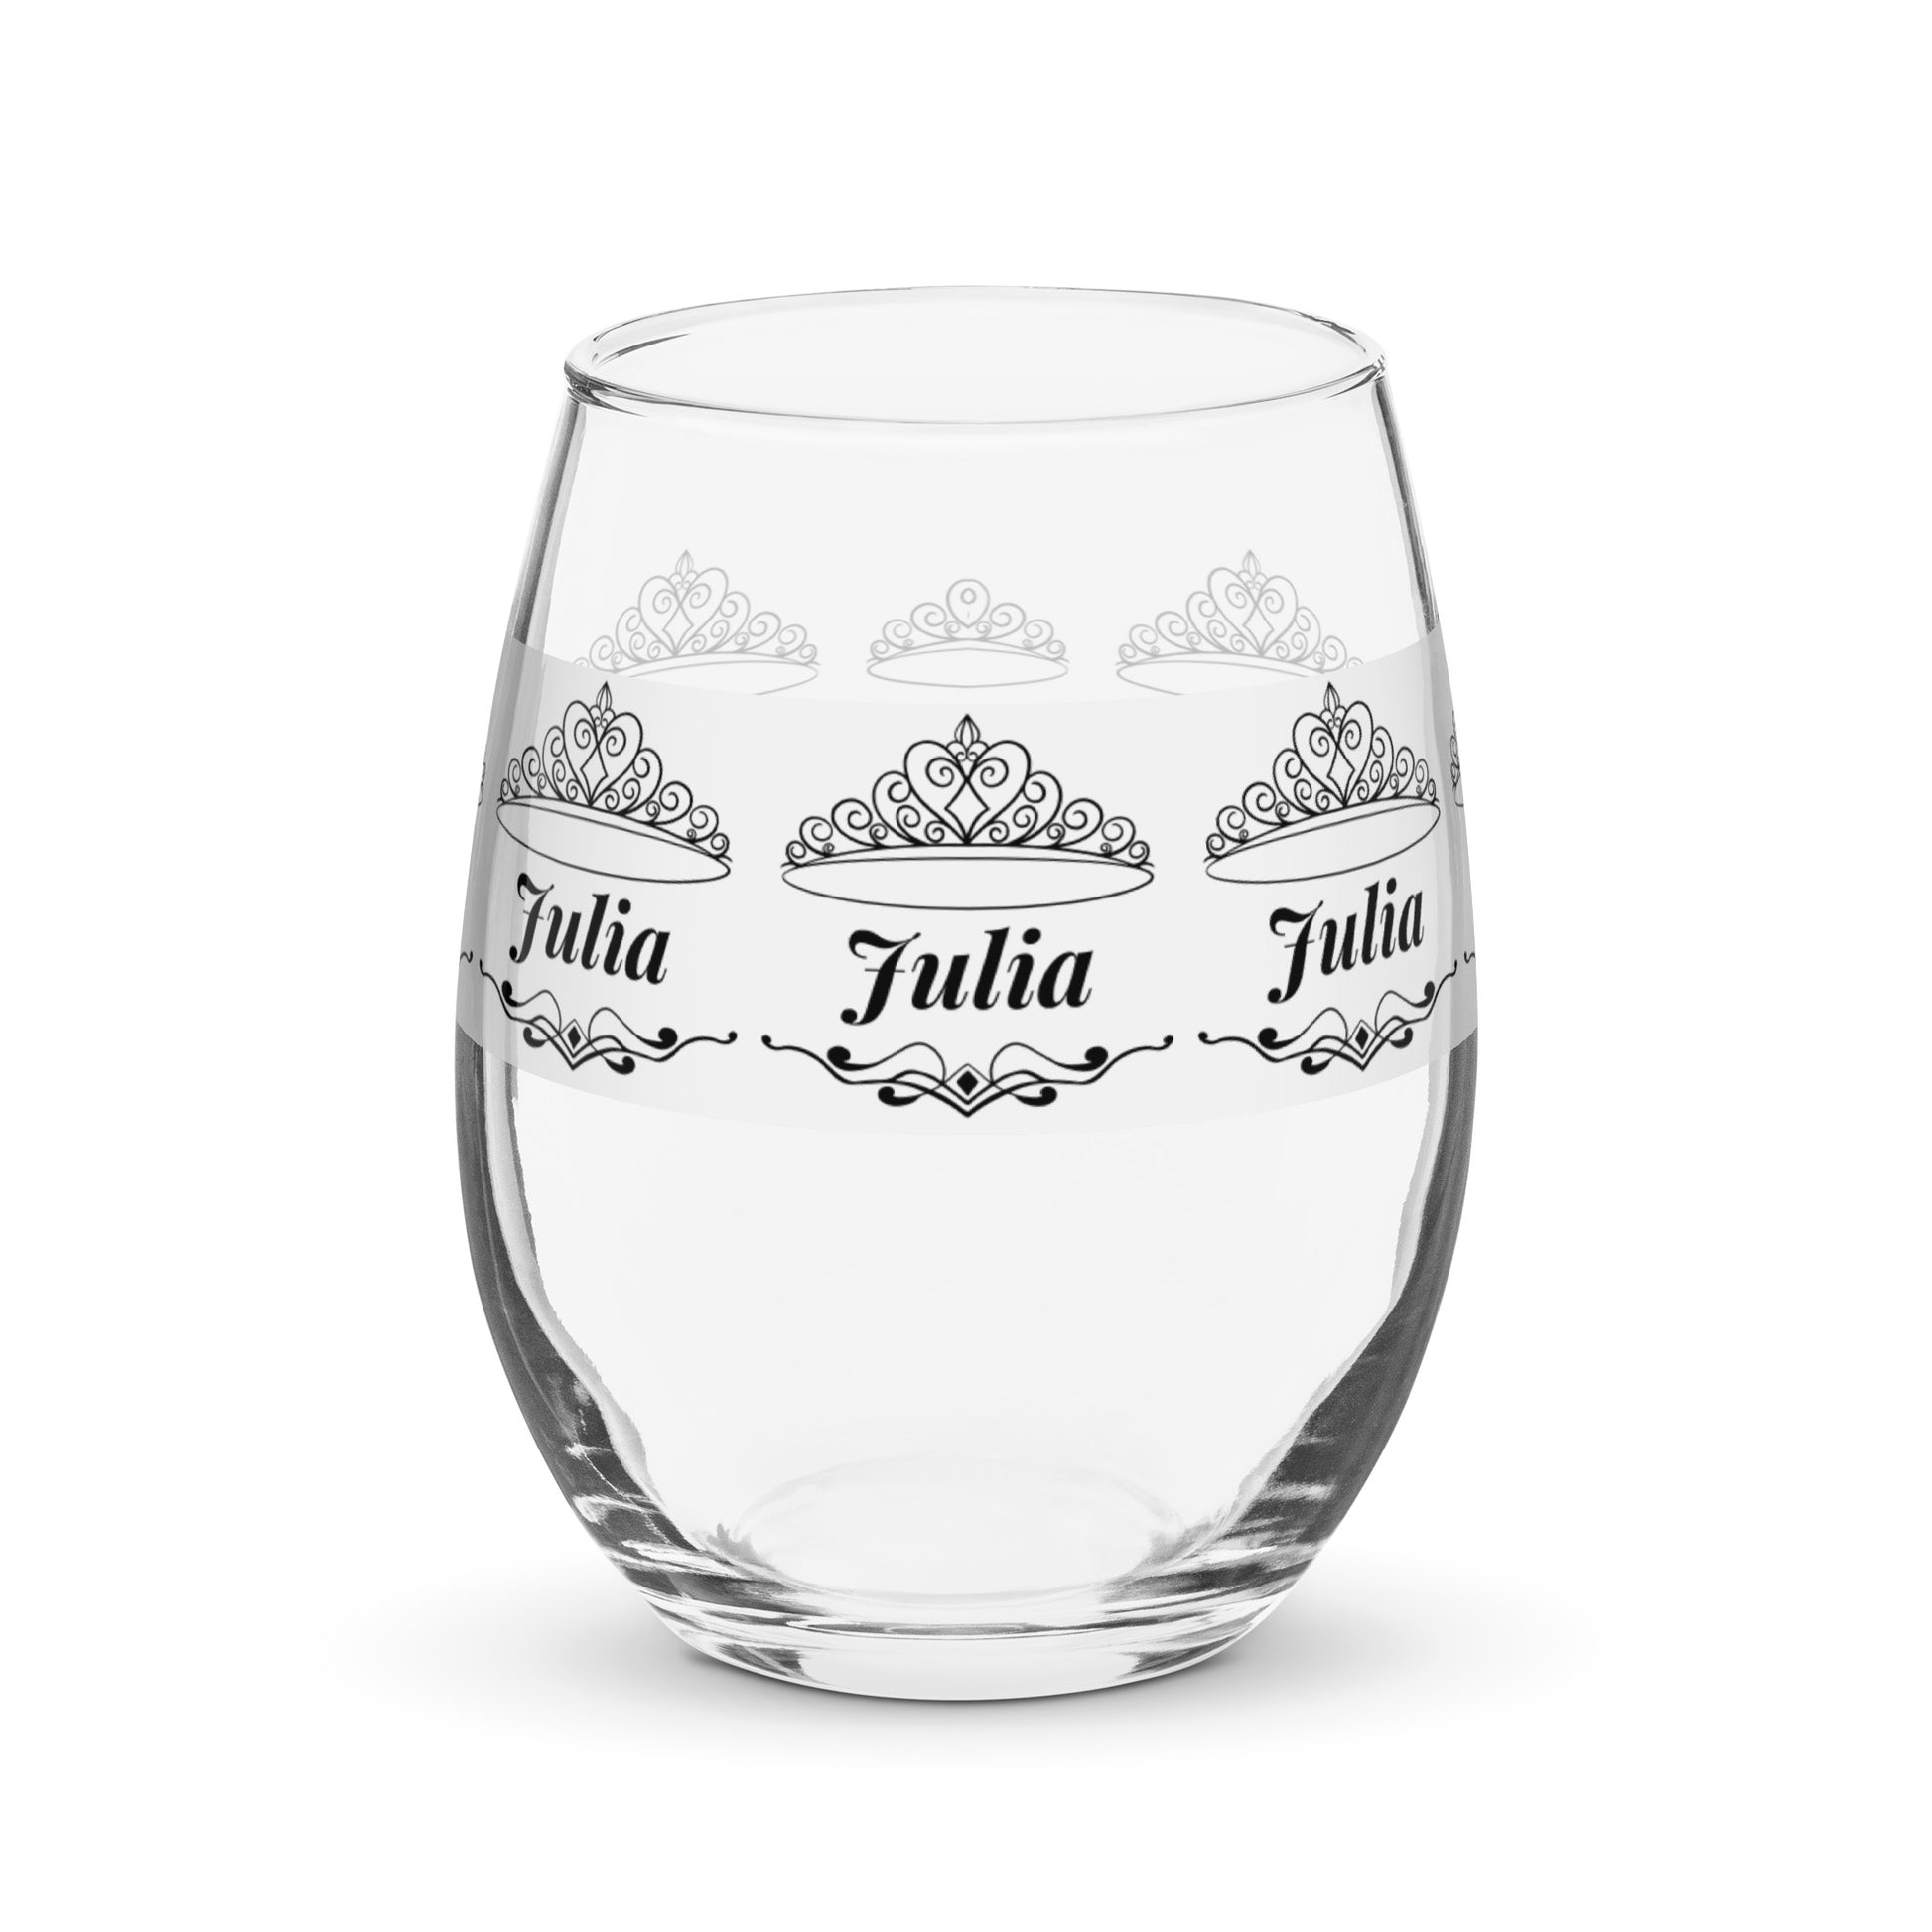 Julia name wine glass personalized wine glass wine glass